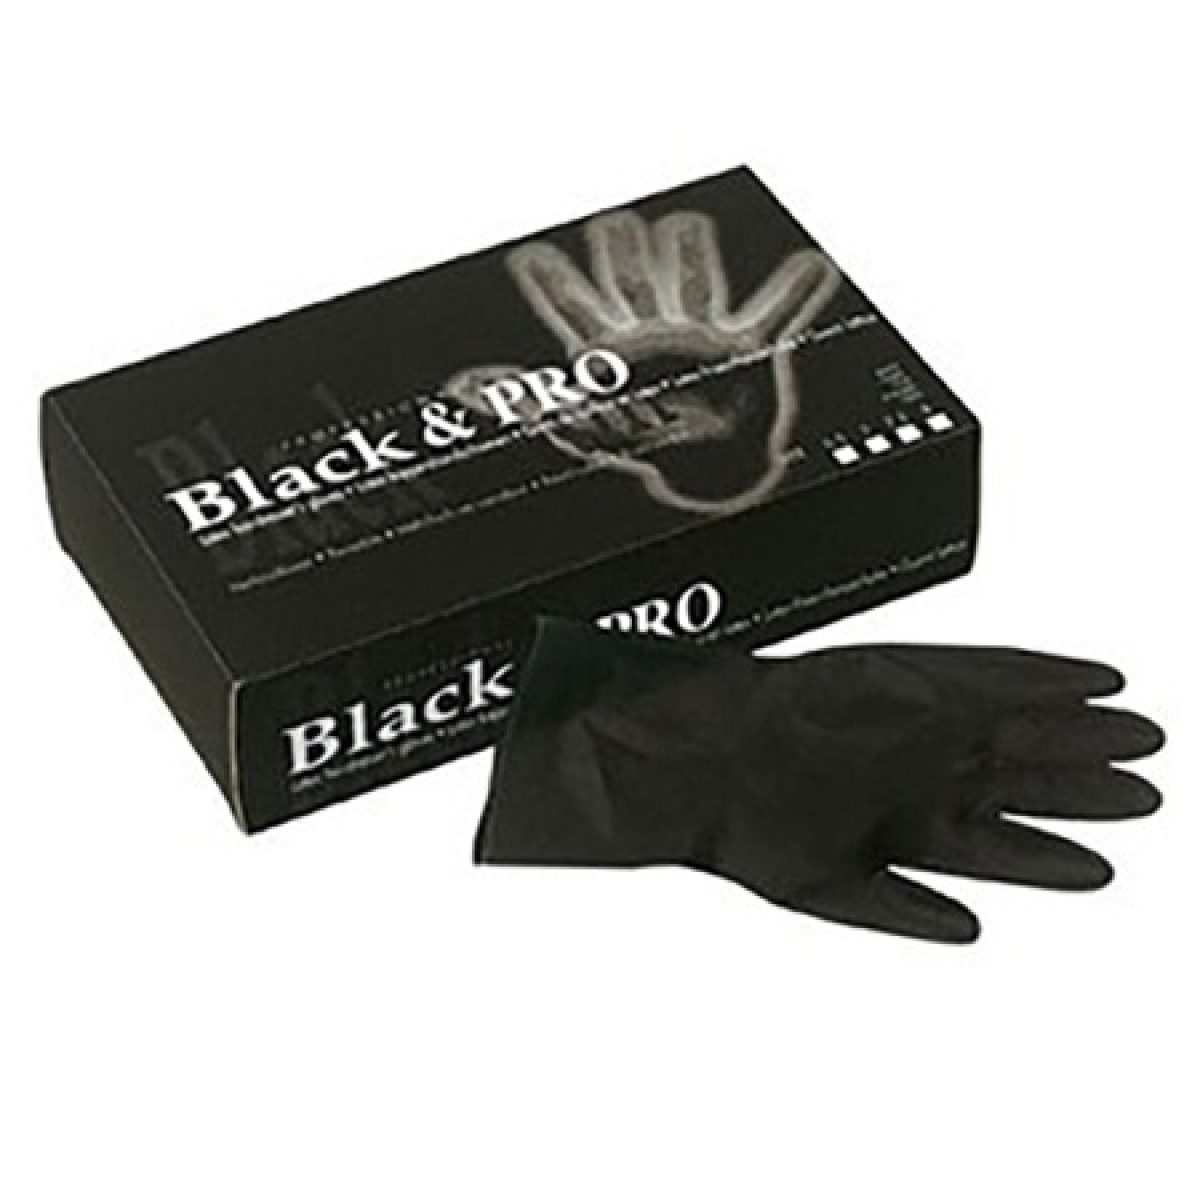 Nail Art Gant Uv Protection Gant Anti Black Gants Protecteur pour